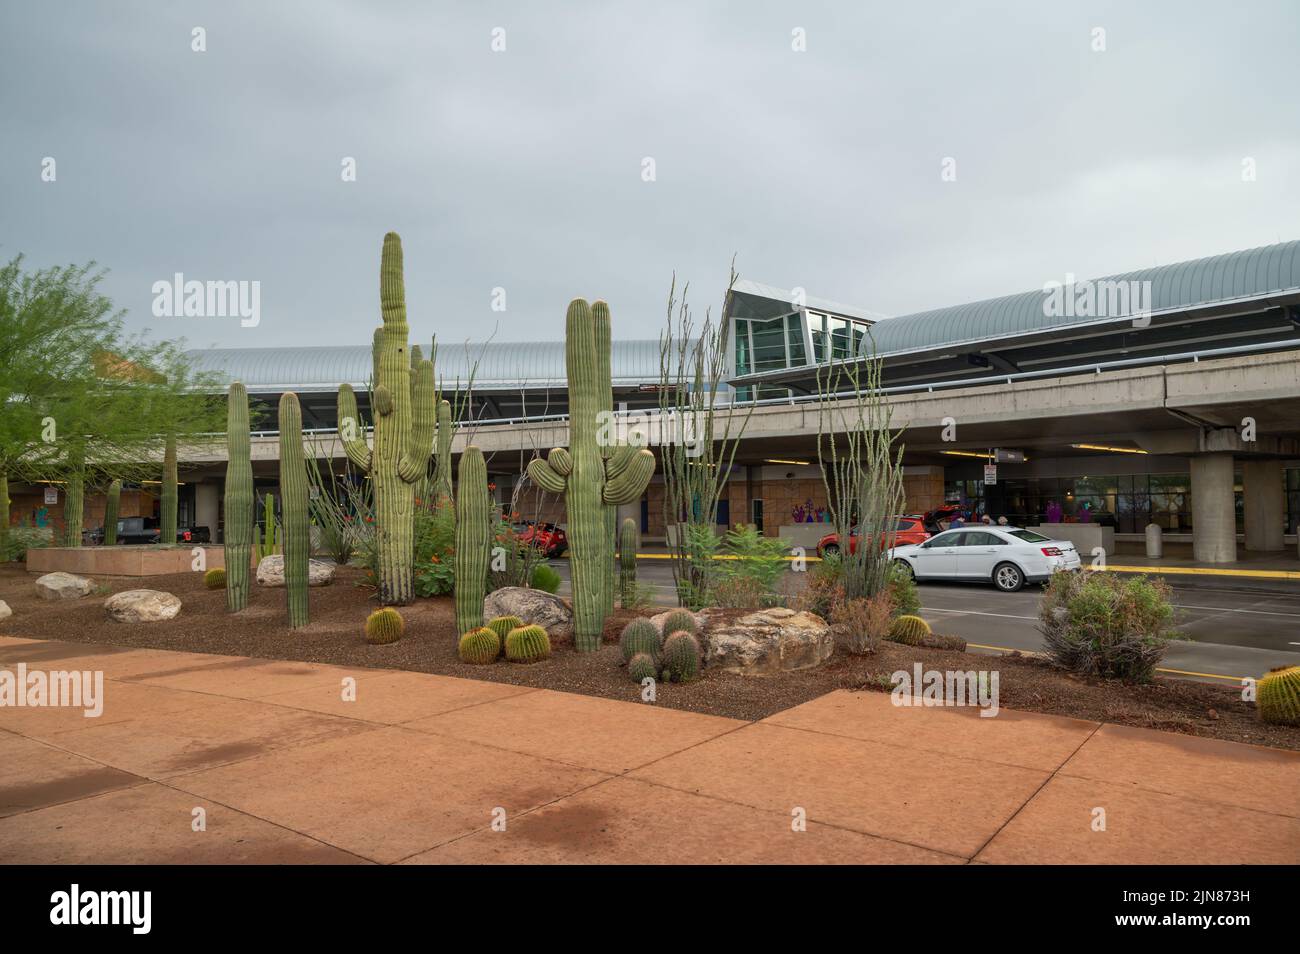 Entrance of Tucson International Airport, Arizona, USA. Beautiful large saguaro cactus landscaping Stock Photo